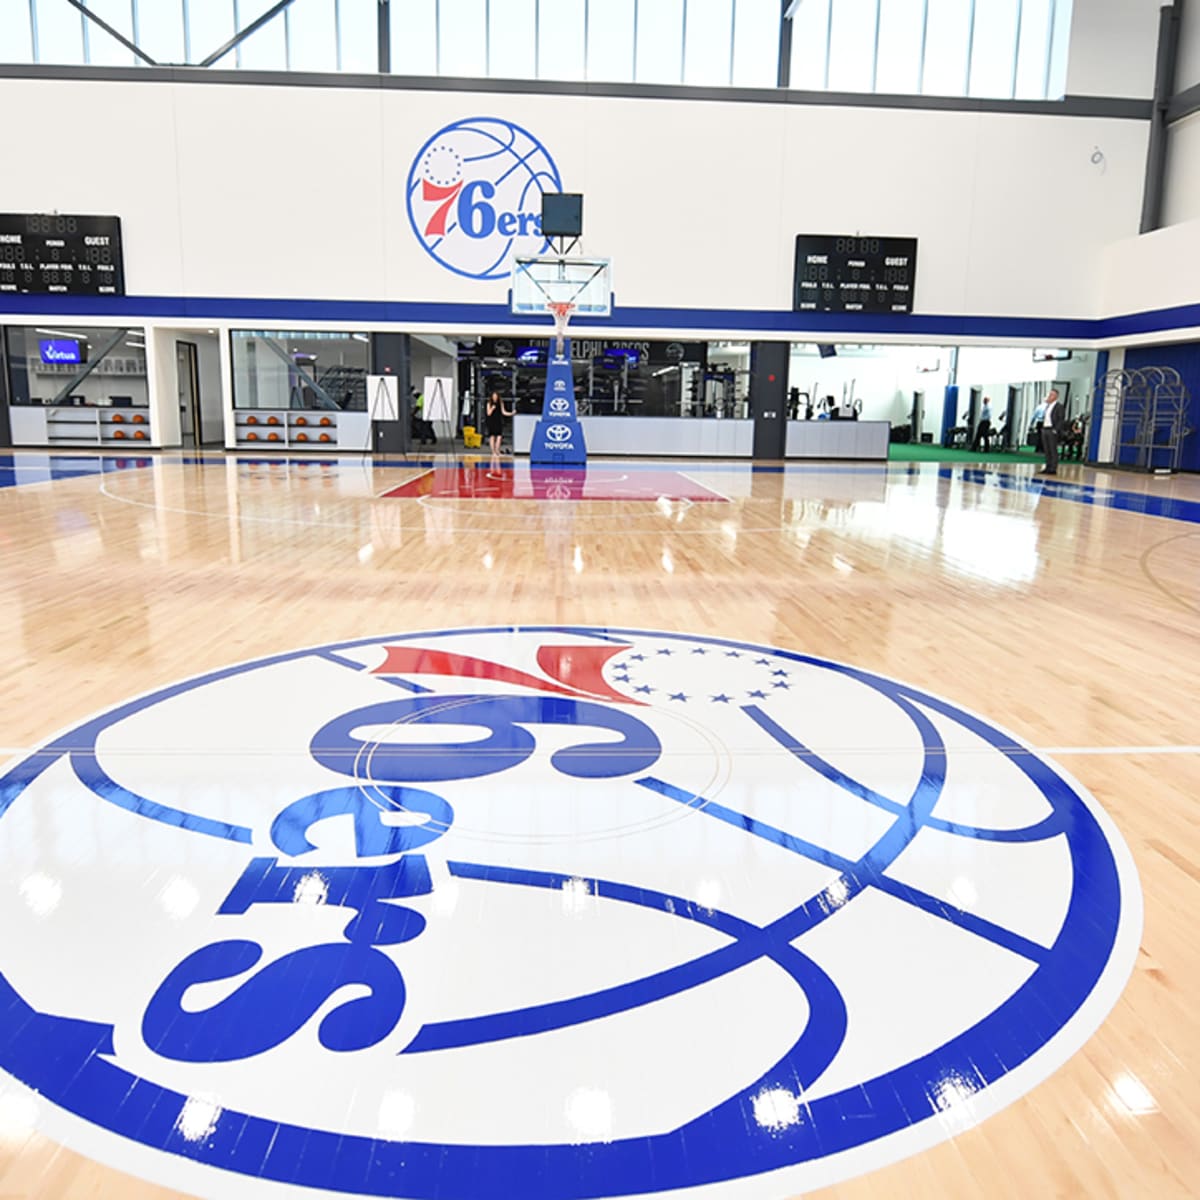 Philadelphia 76ers — Sports Design Agency